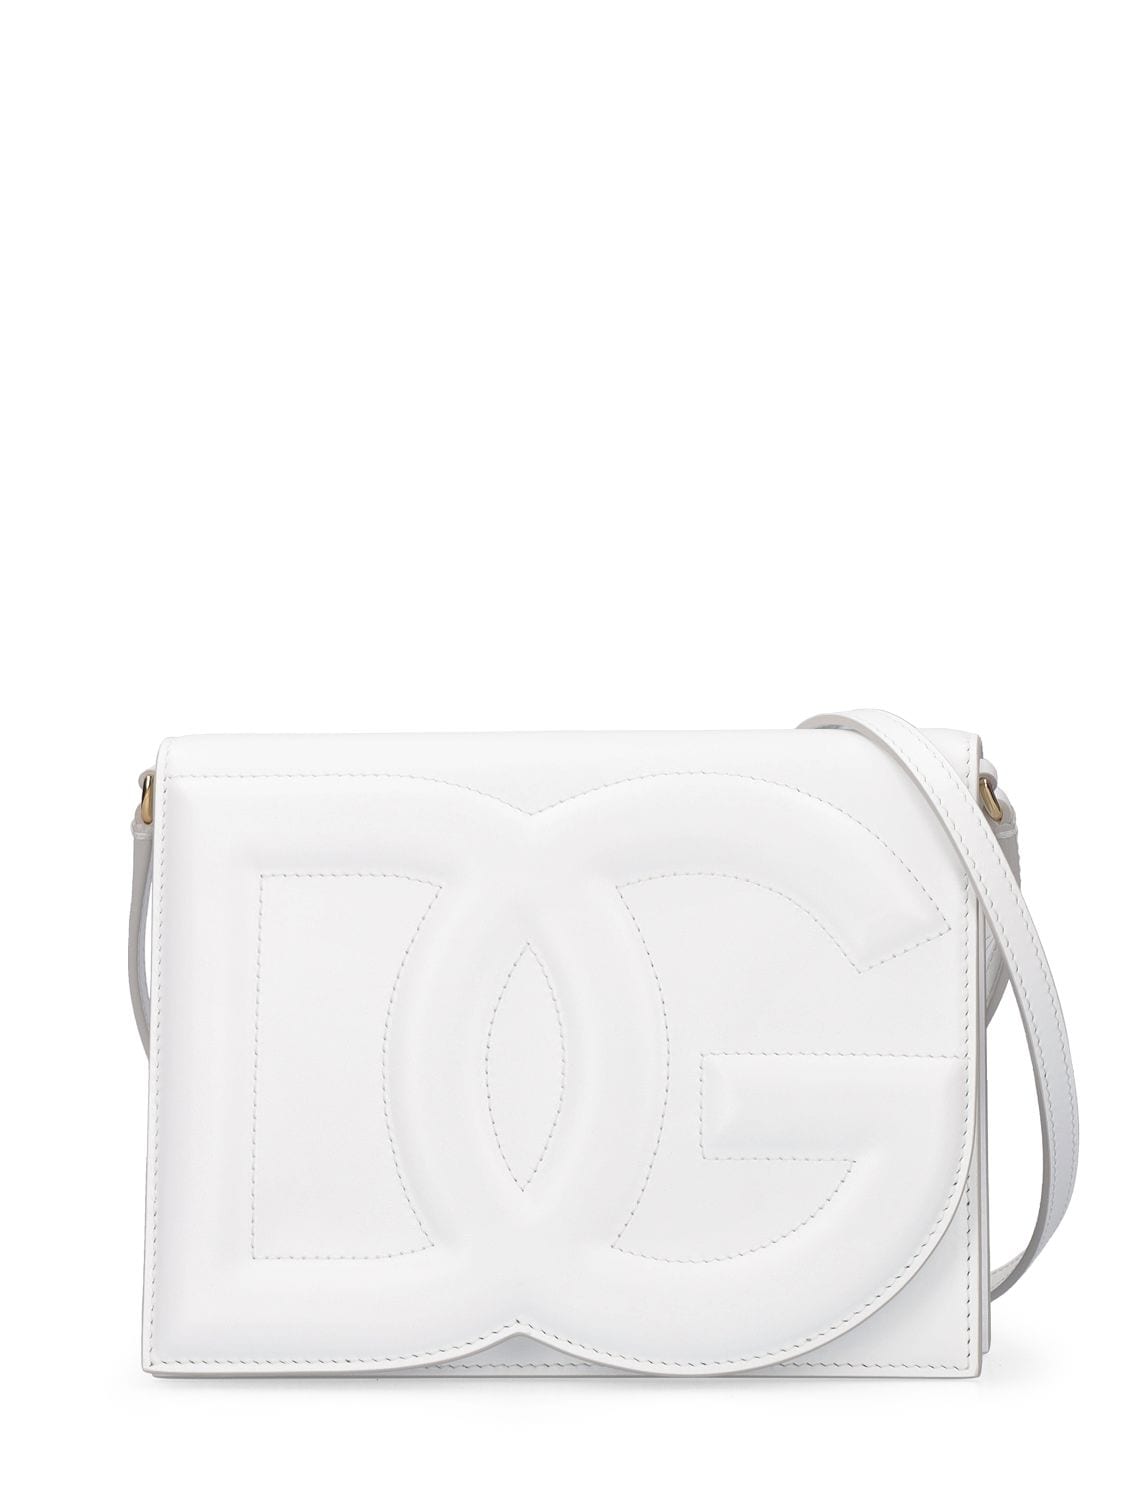 Dolce & Gabbana Dg Logo Leather Shoulder Bag In Optic White